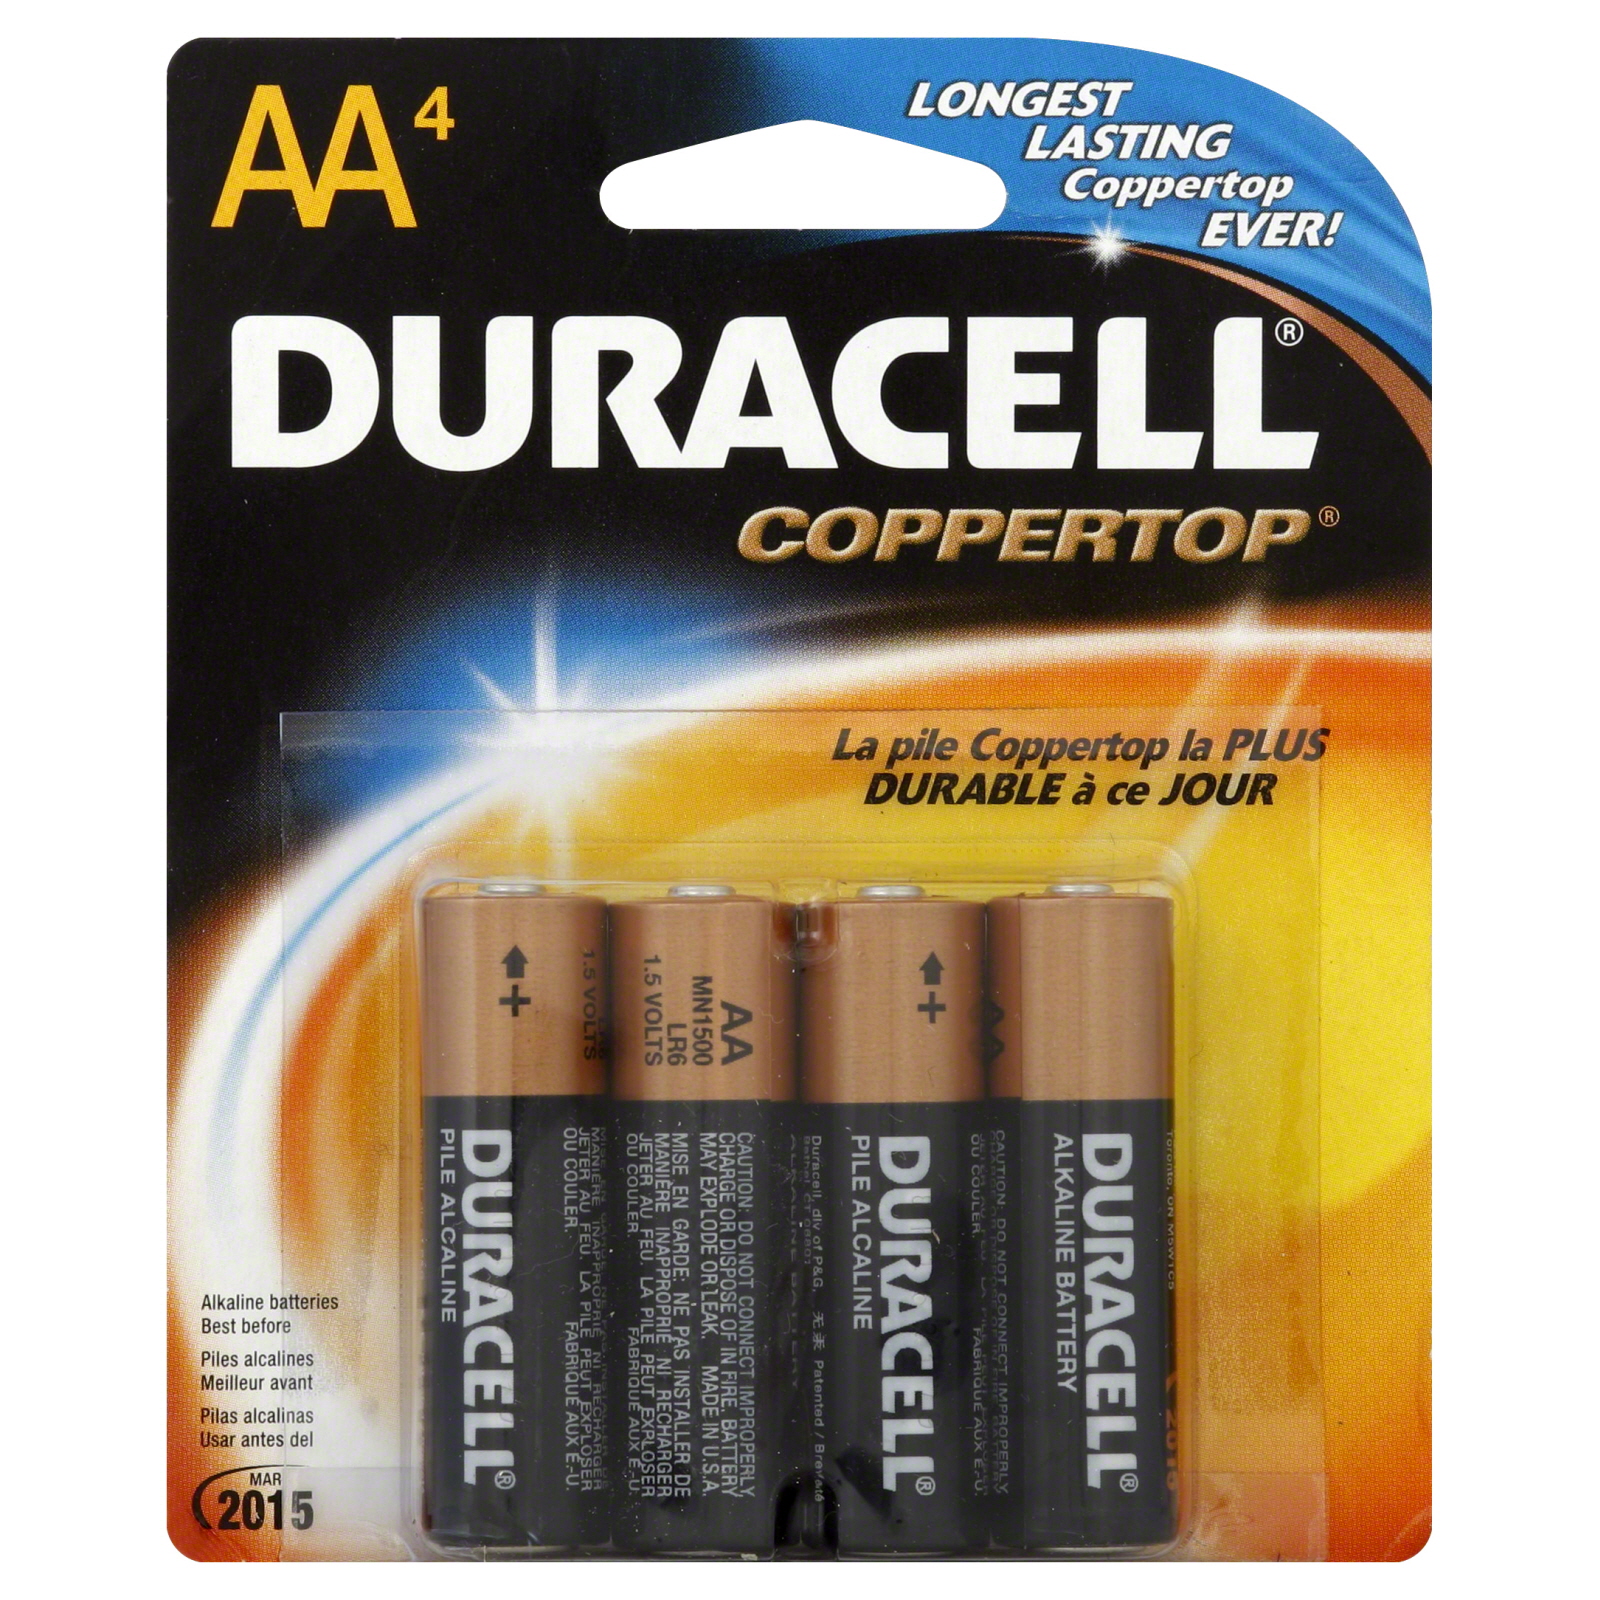 Duracell Coppertop 4 Pack AA Batteries, Alkaline